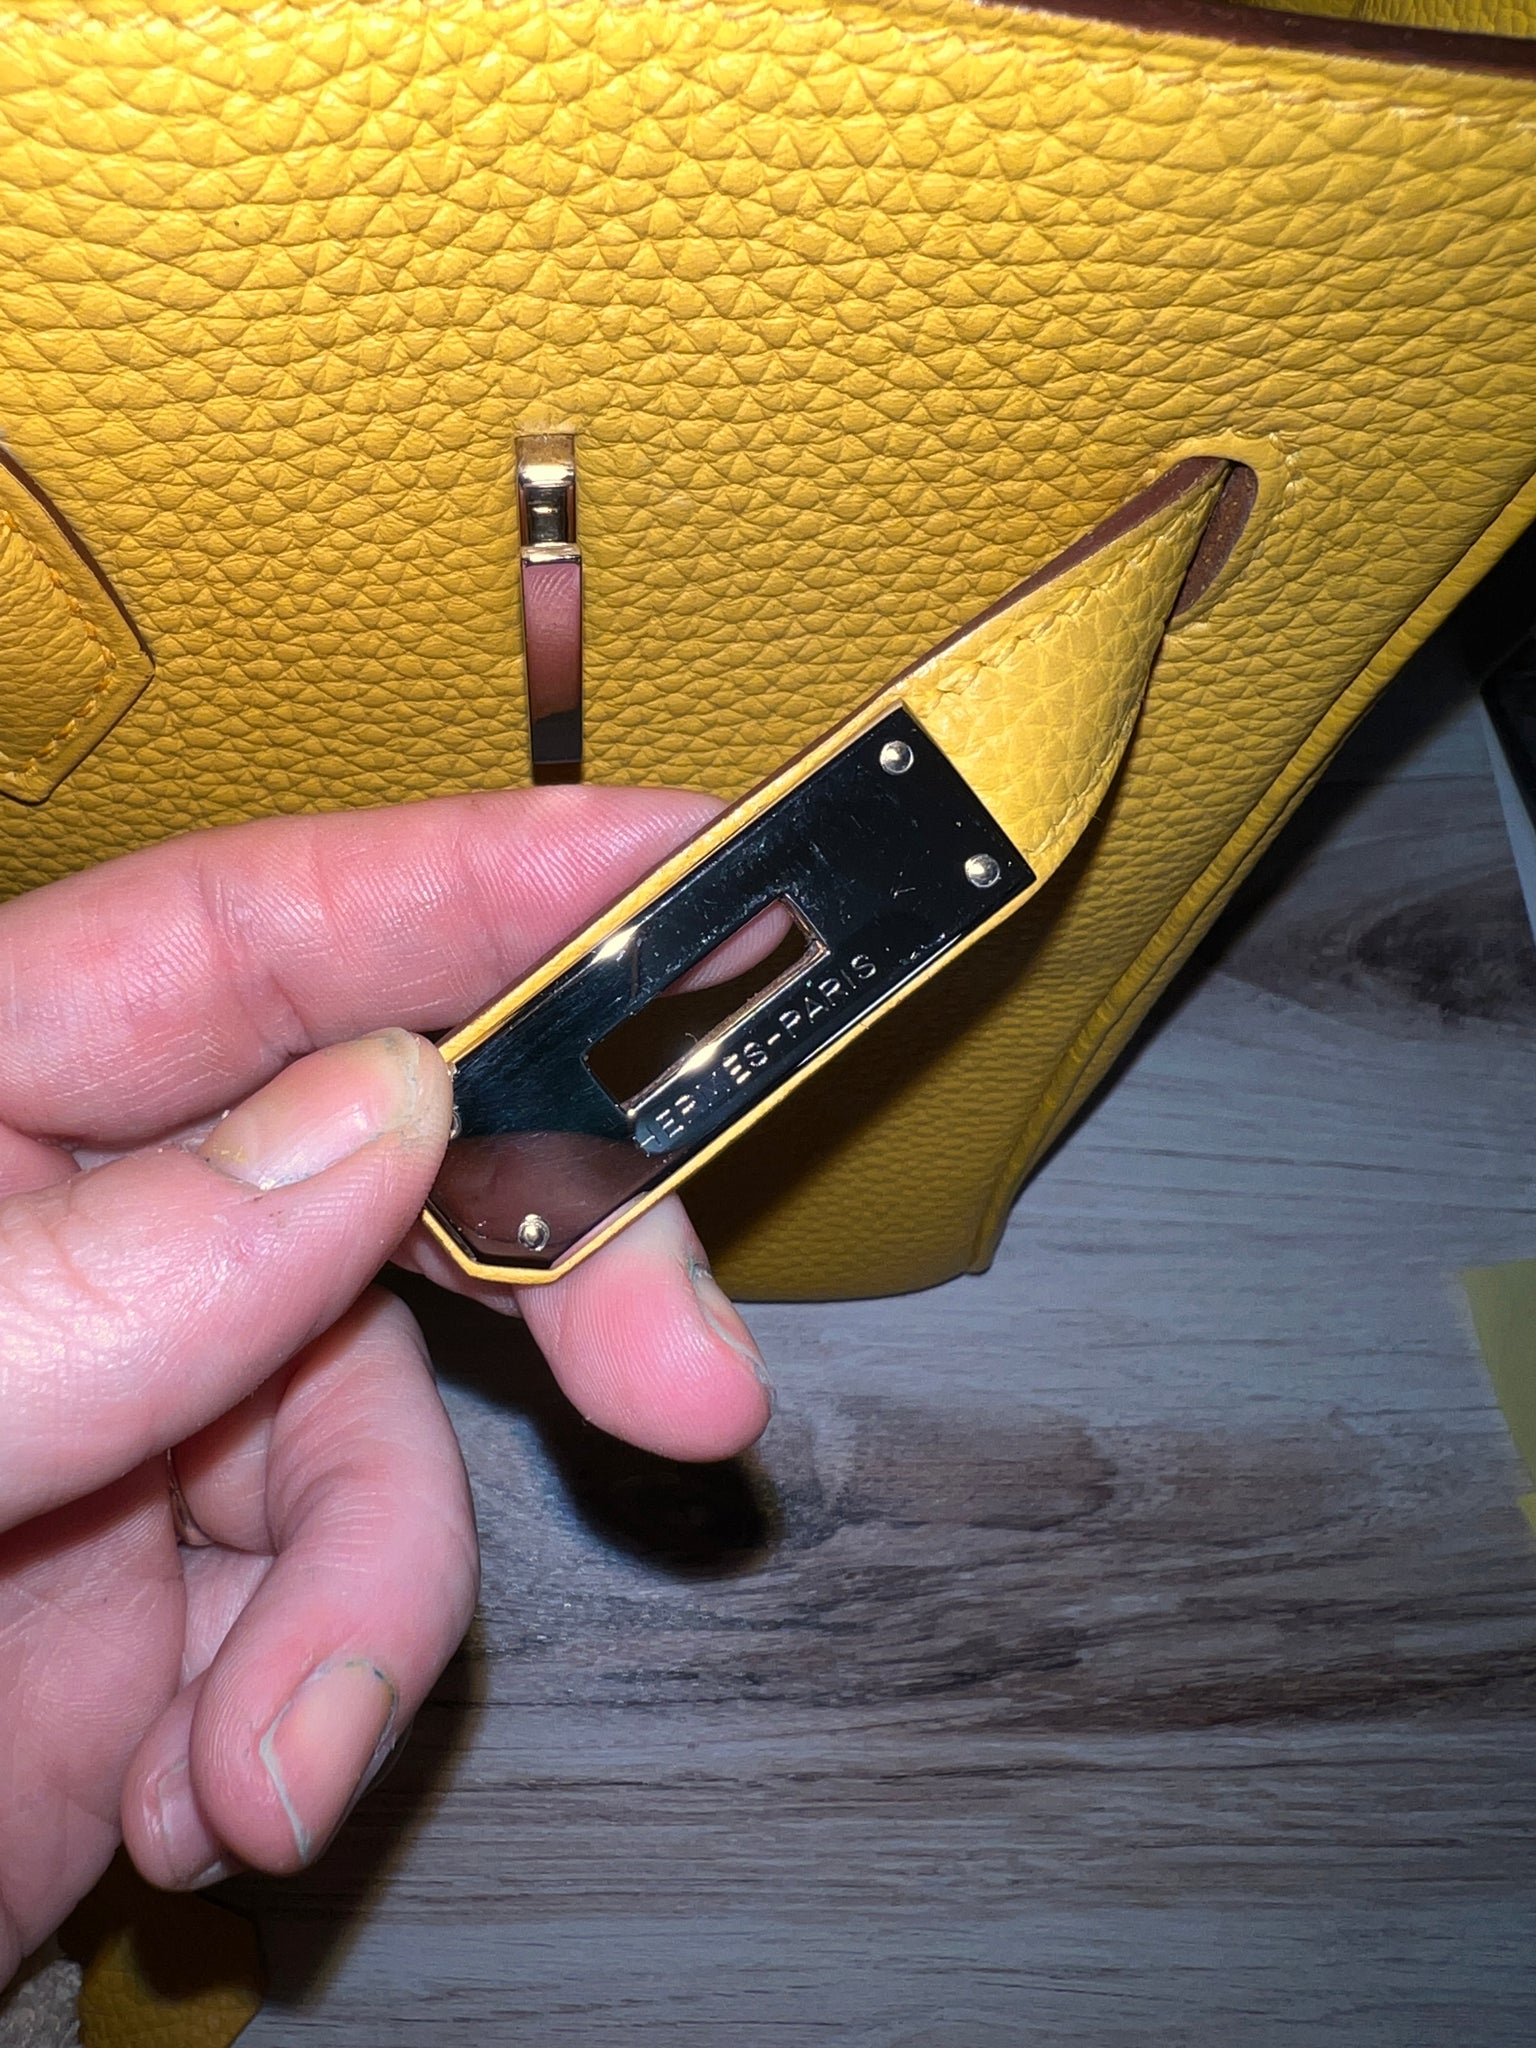 Hermes 35cm Soleil Clemence Leather Birkin Bag with Palladium, Lot #58048